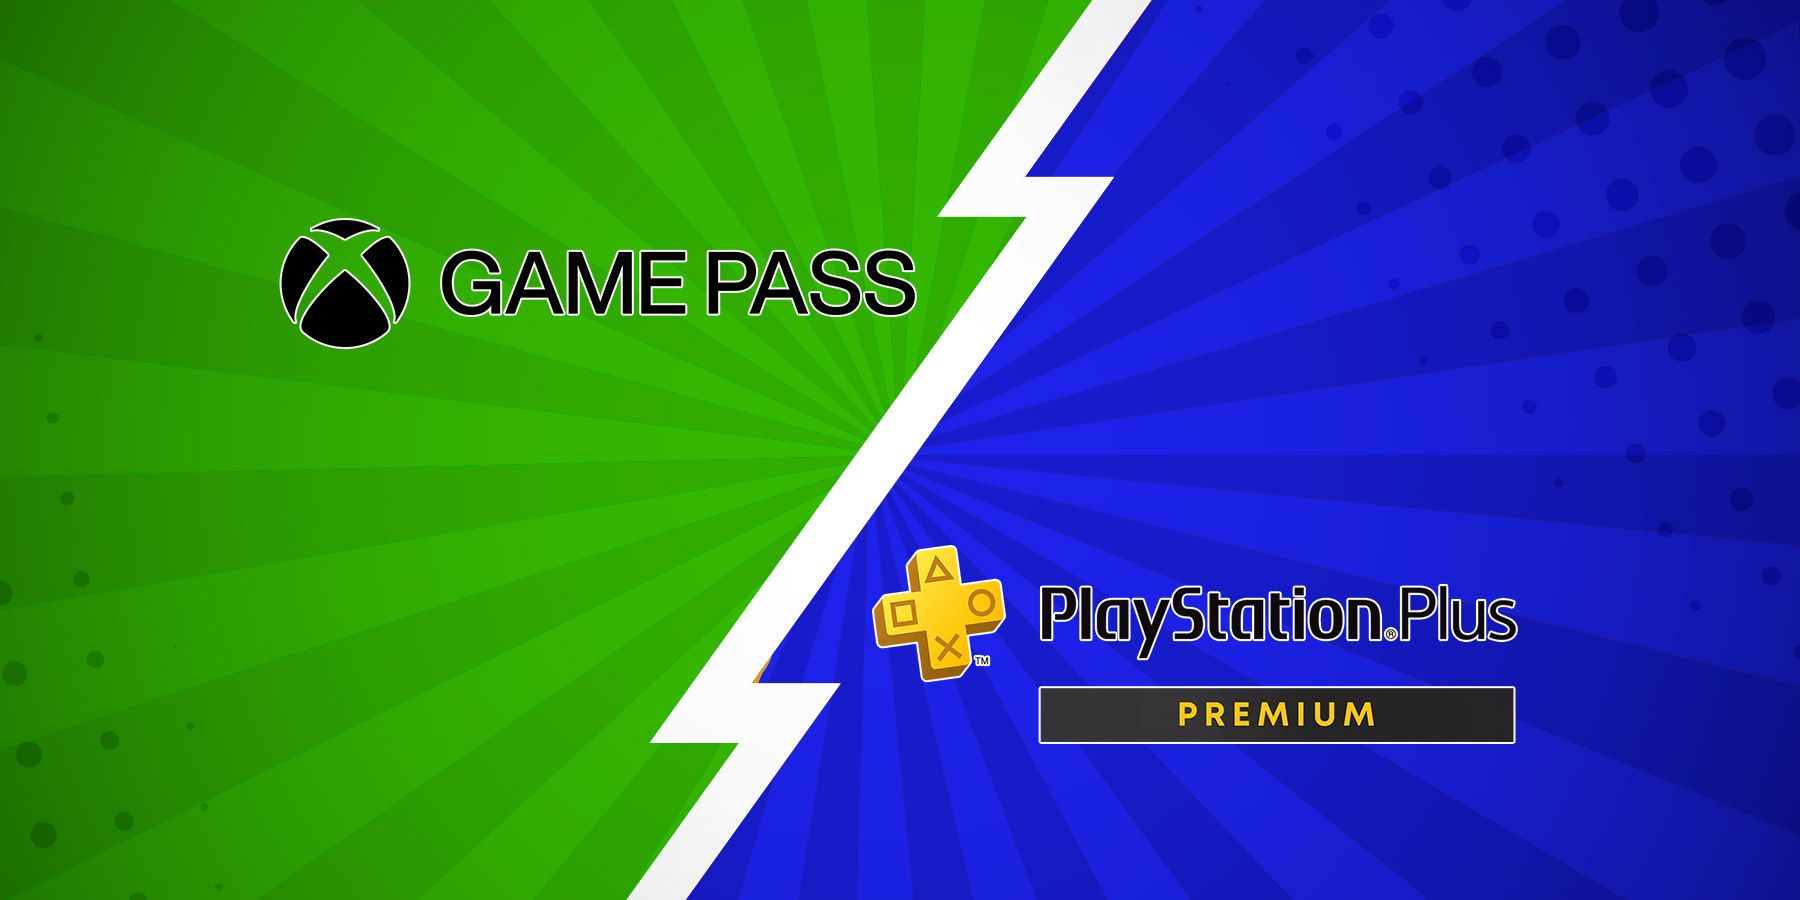 xbox game pass and ps plus premium logos